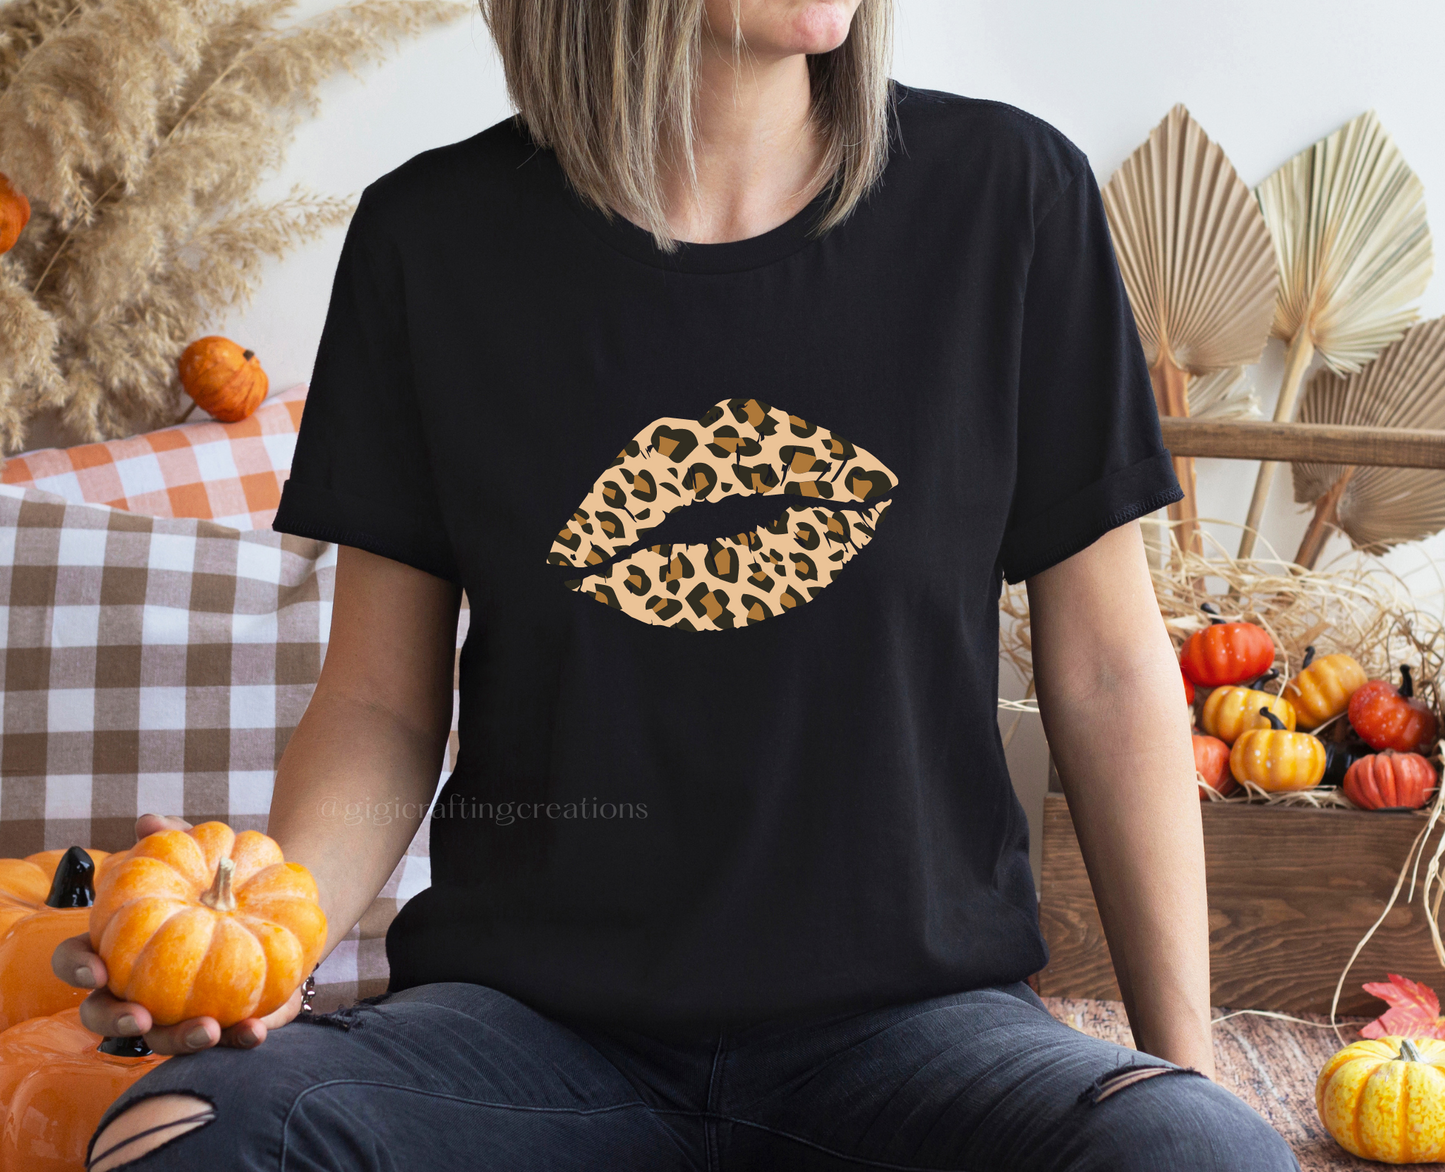 Leopard Lips Relaxed Unisex T-shirt